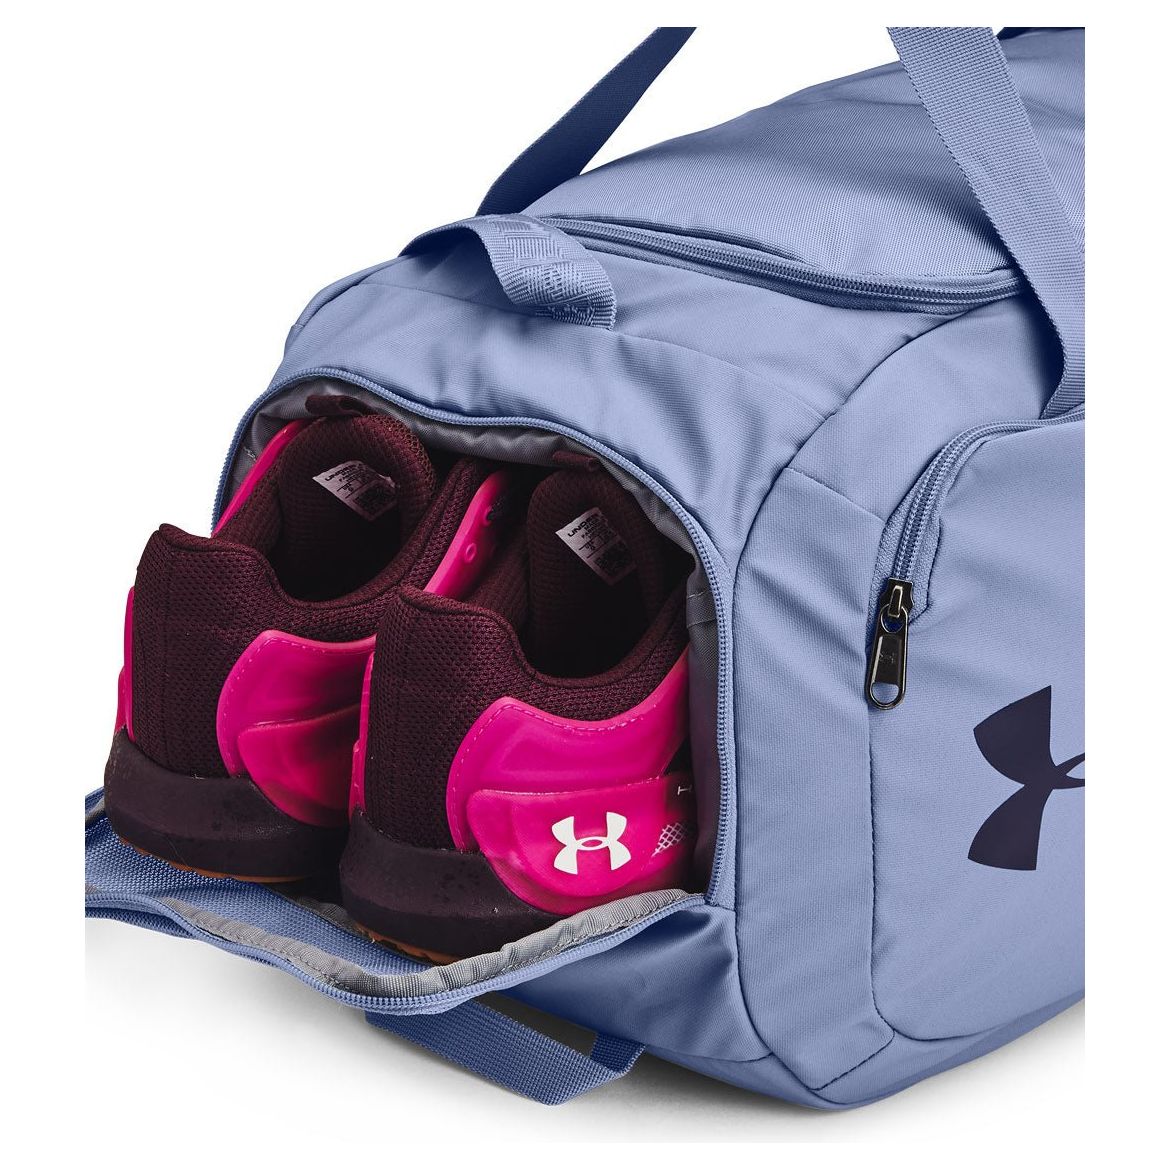 Under Armour-Under Armour Gym Bag Undeniable Duffle 4.0 - Brandat Outlet